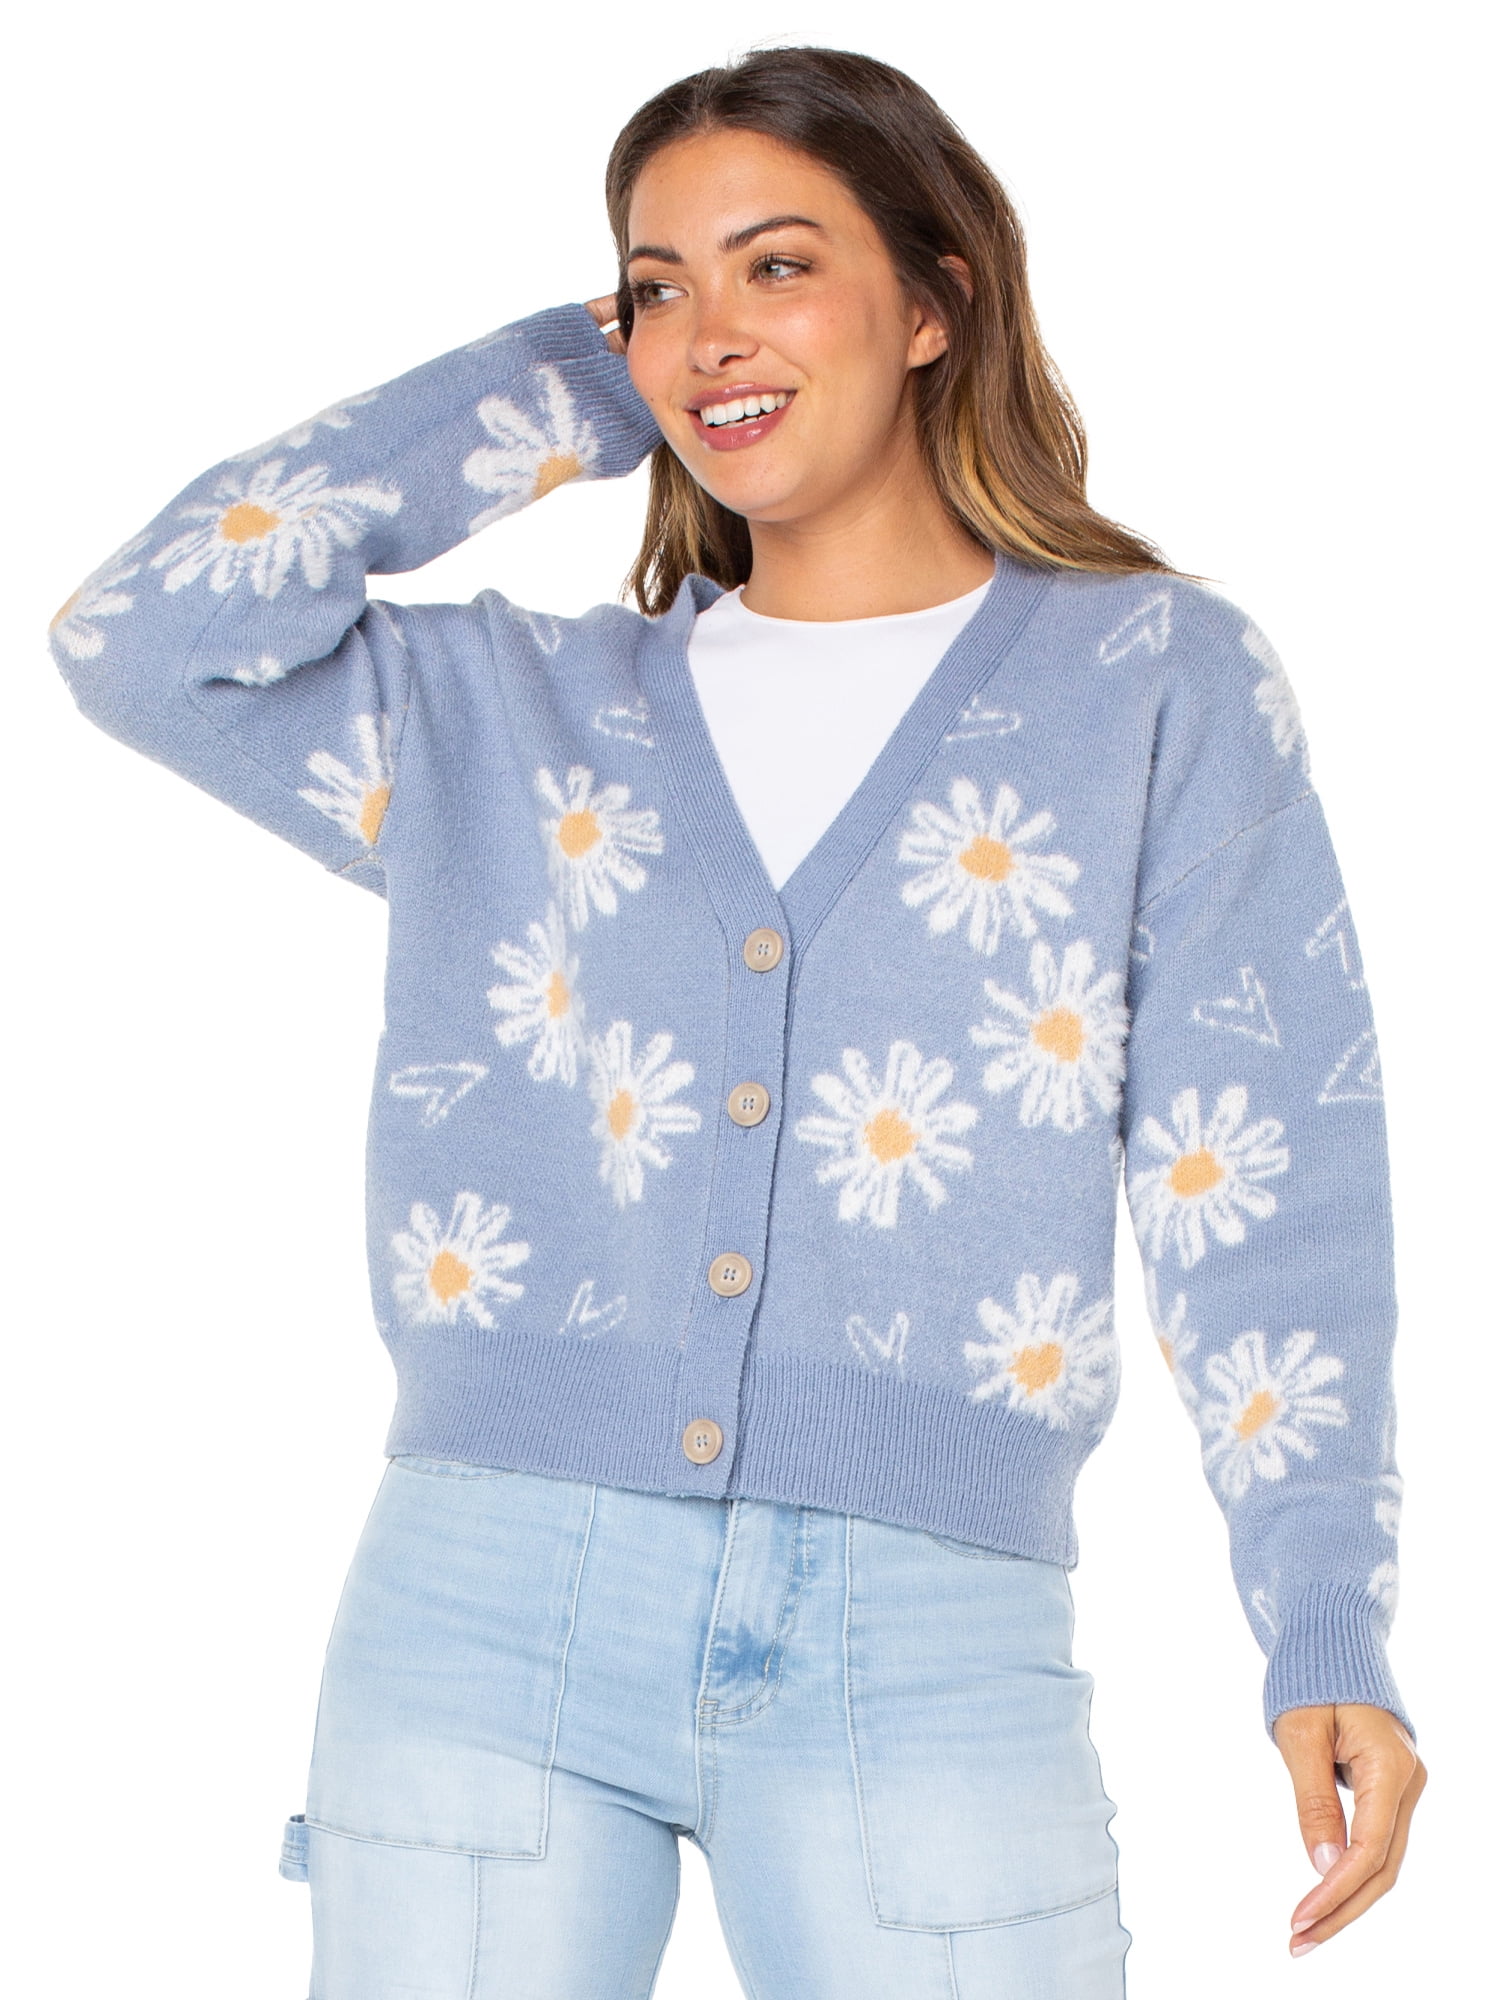 Cowl Neck Raglan Sleeve Sweater